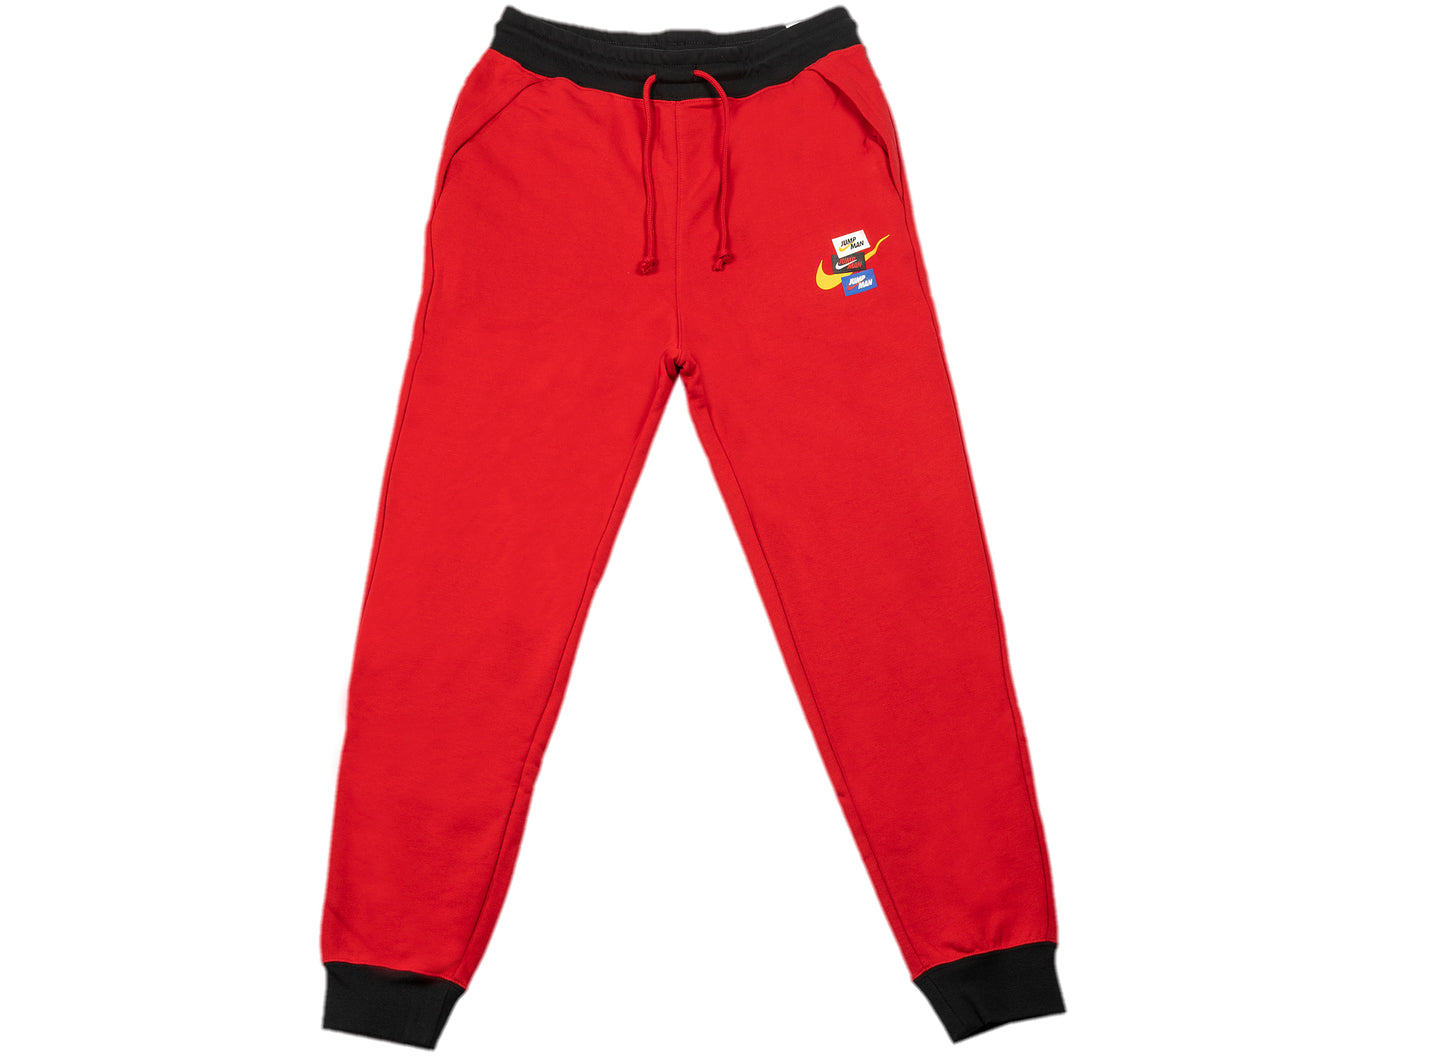 Jordan Jumpman Fleece Pants in Red